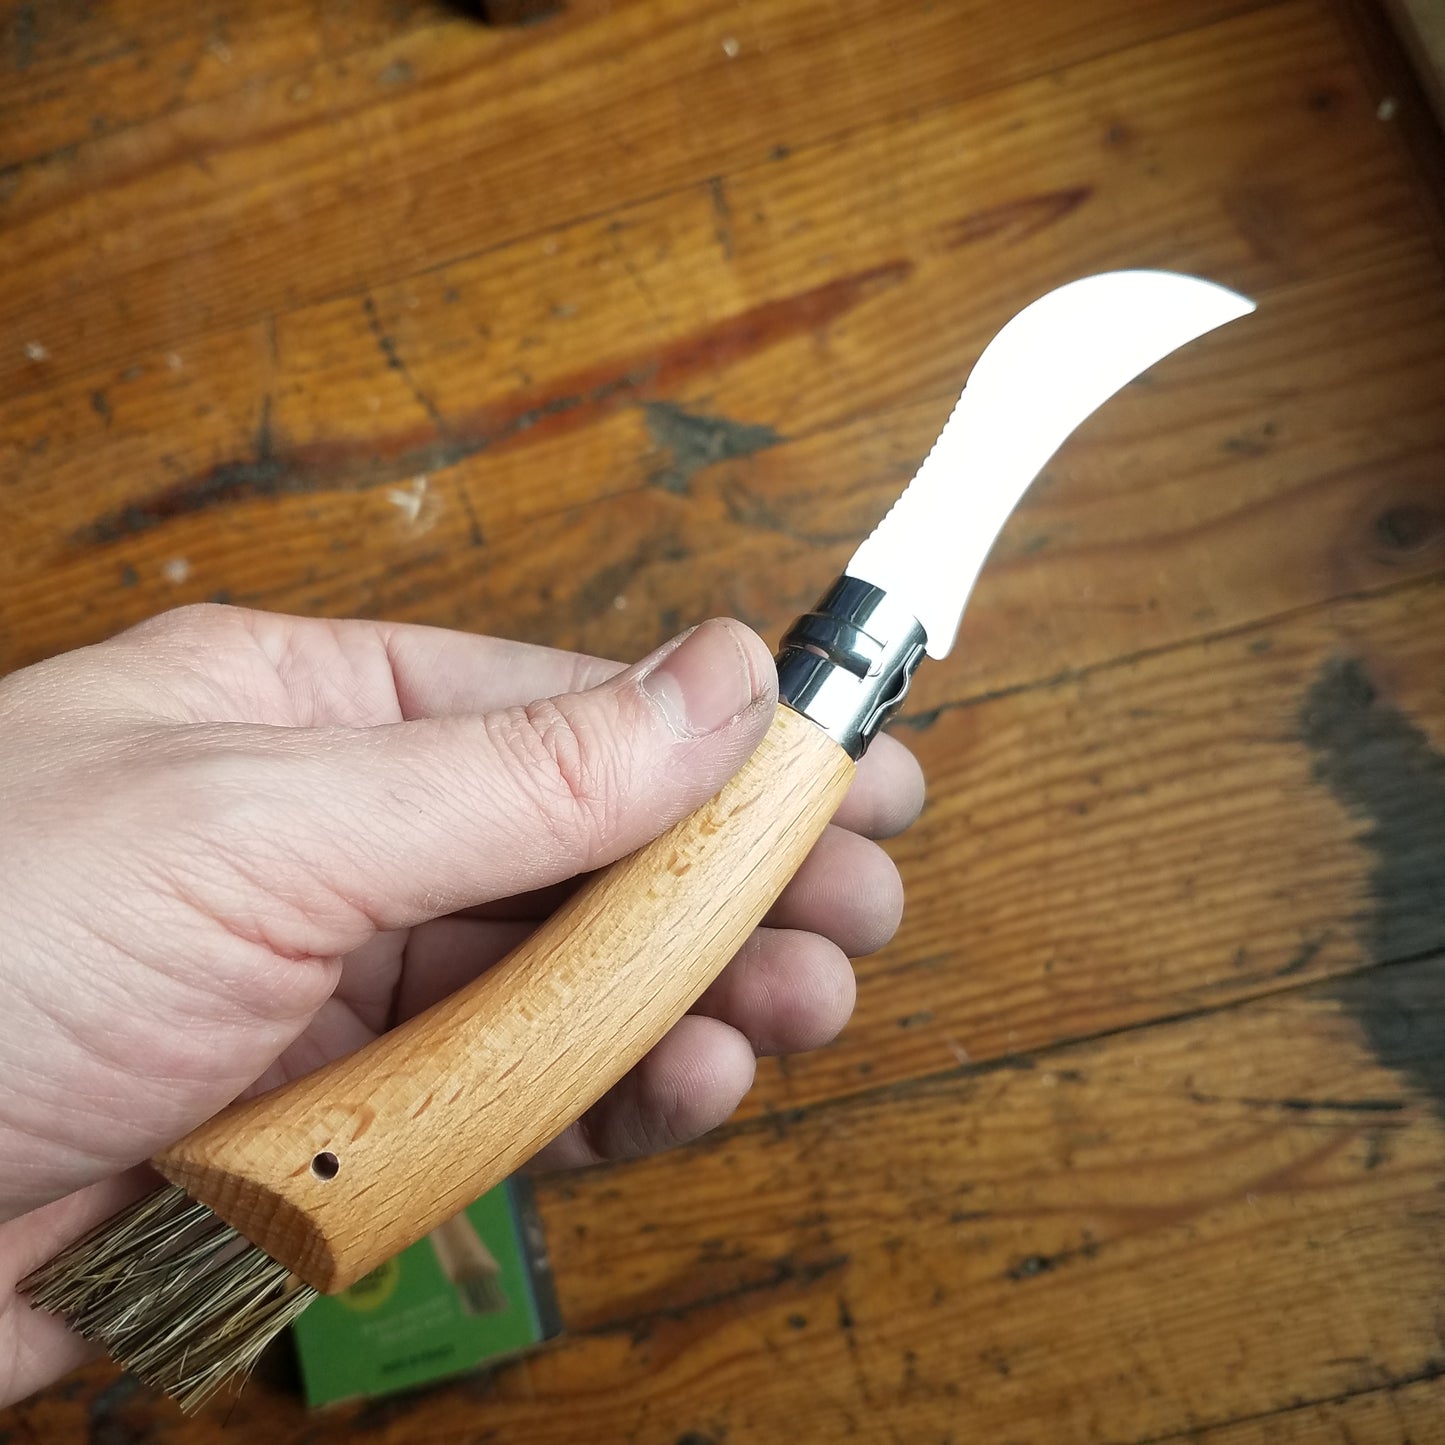 Opinel Mushroom No. 8 Folding Knife